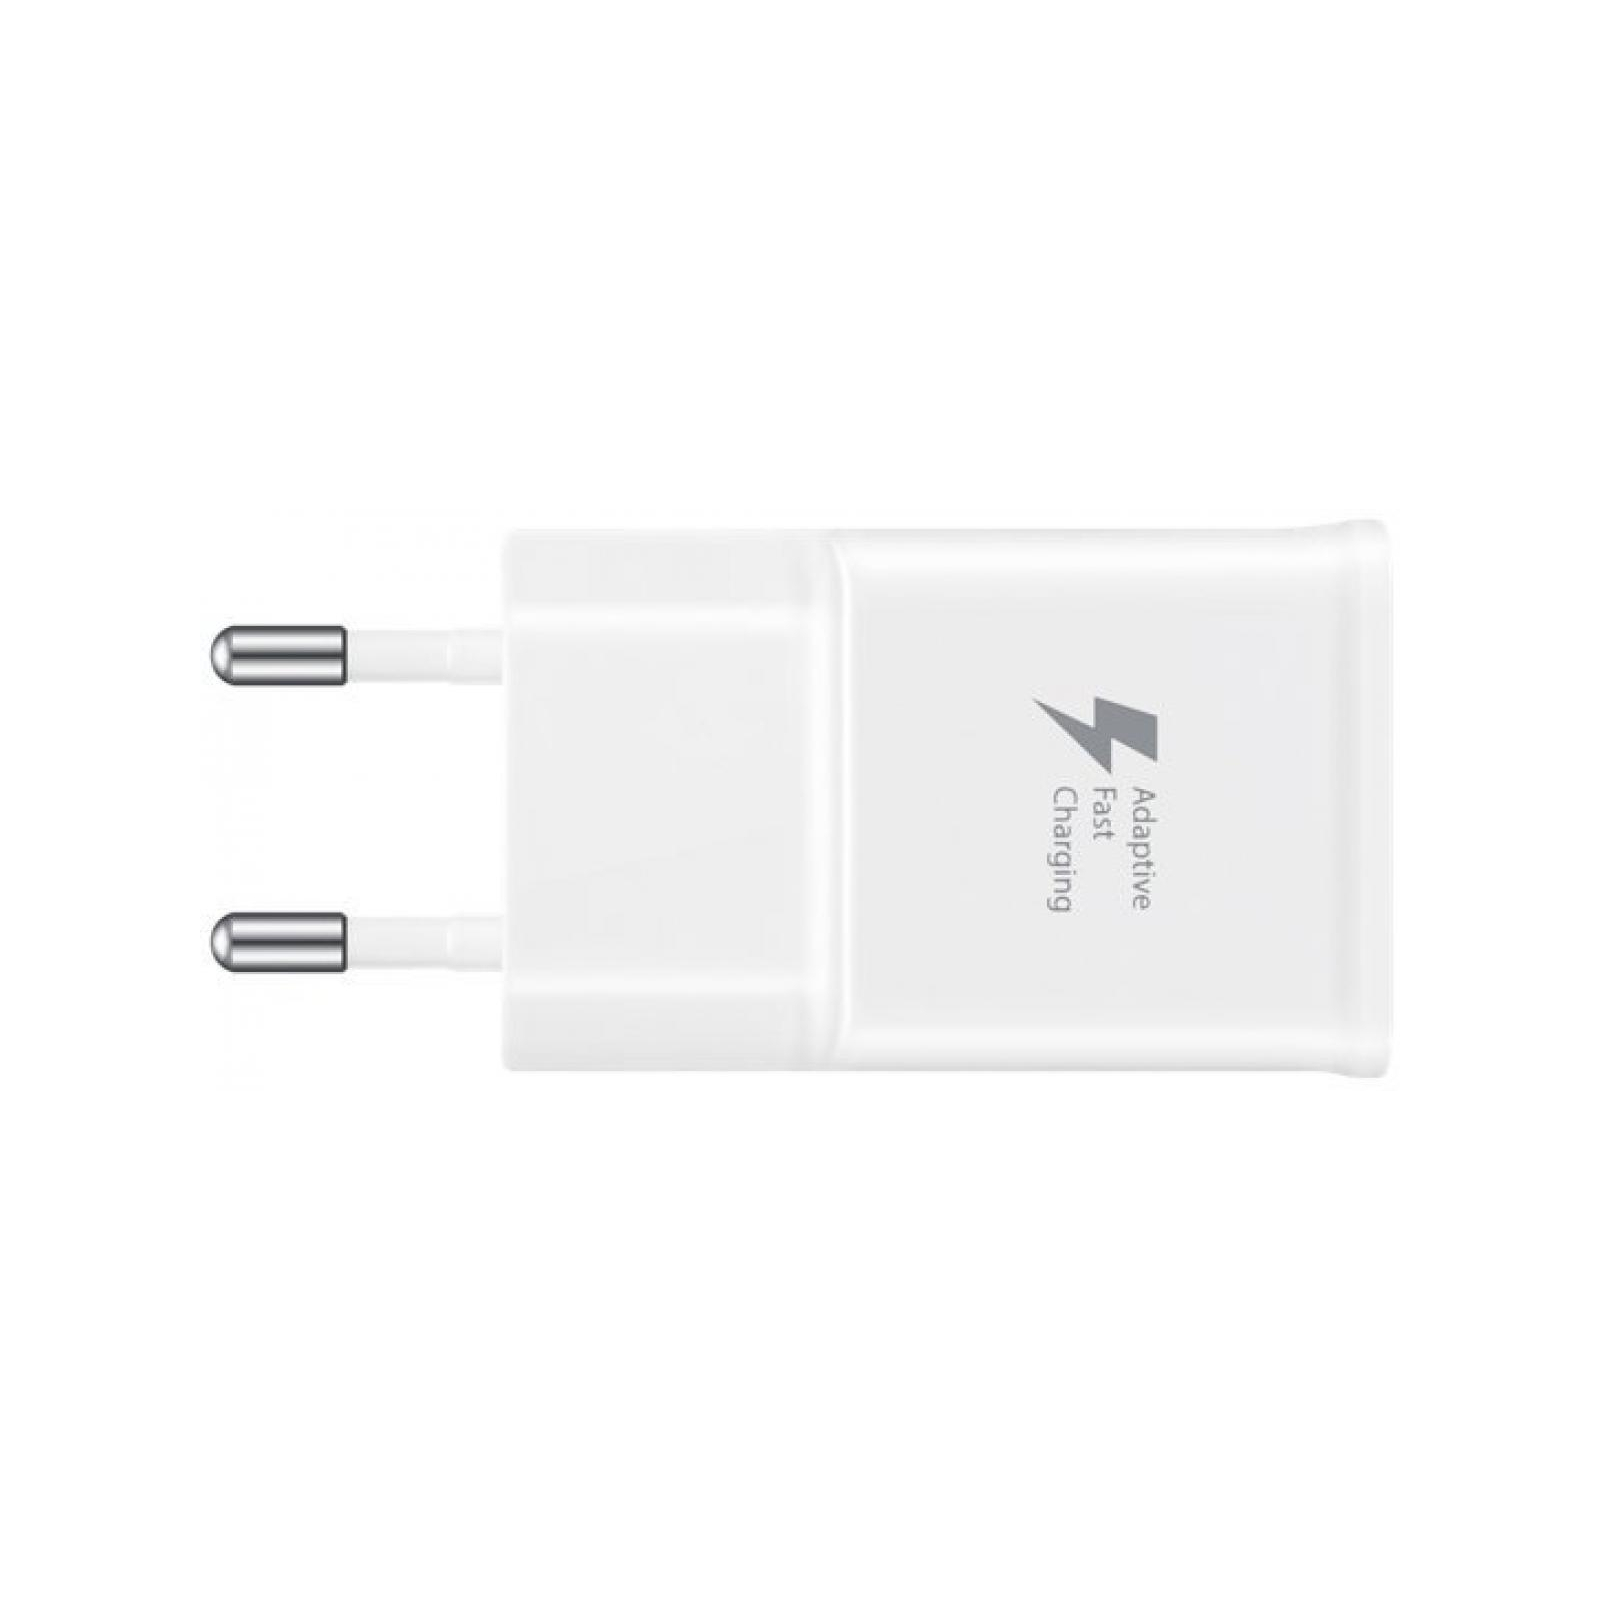 Зарядное устройство Samsung 2A + Type-C Cable (Fast Charging) White (EP-TA20EWECGRU) изображение 3